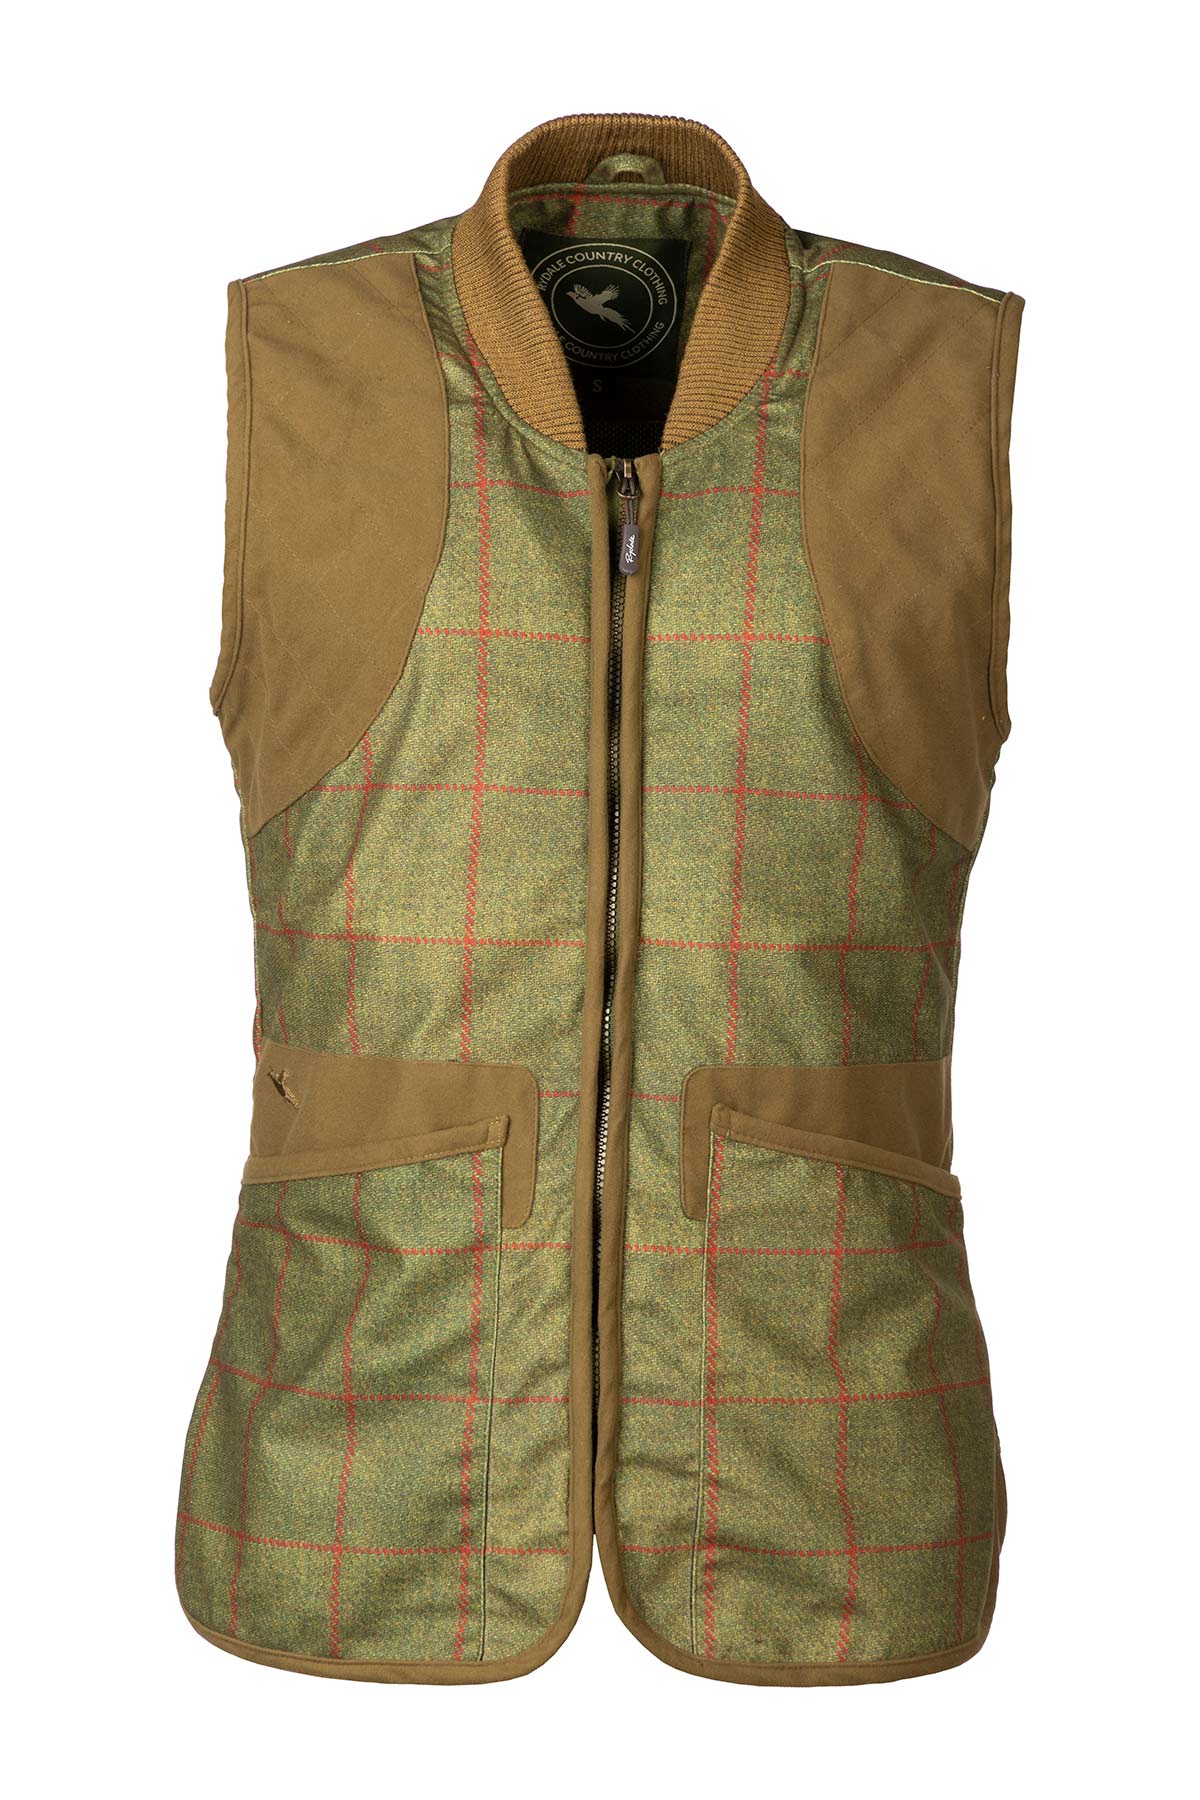 Men's Tweed Print Shooting Waistcoat UK | Shooting Gilets | Rydale